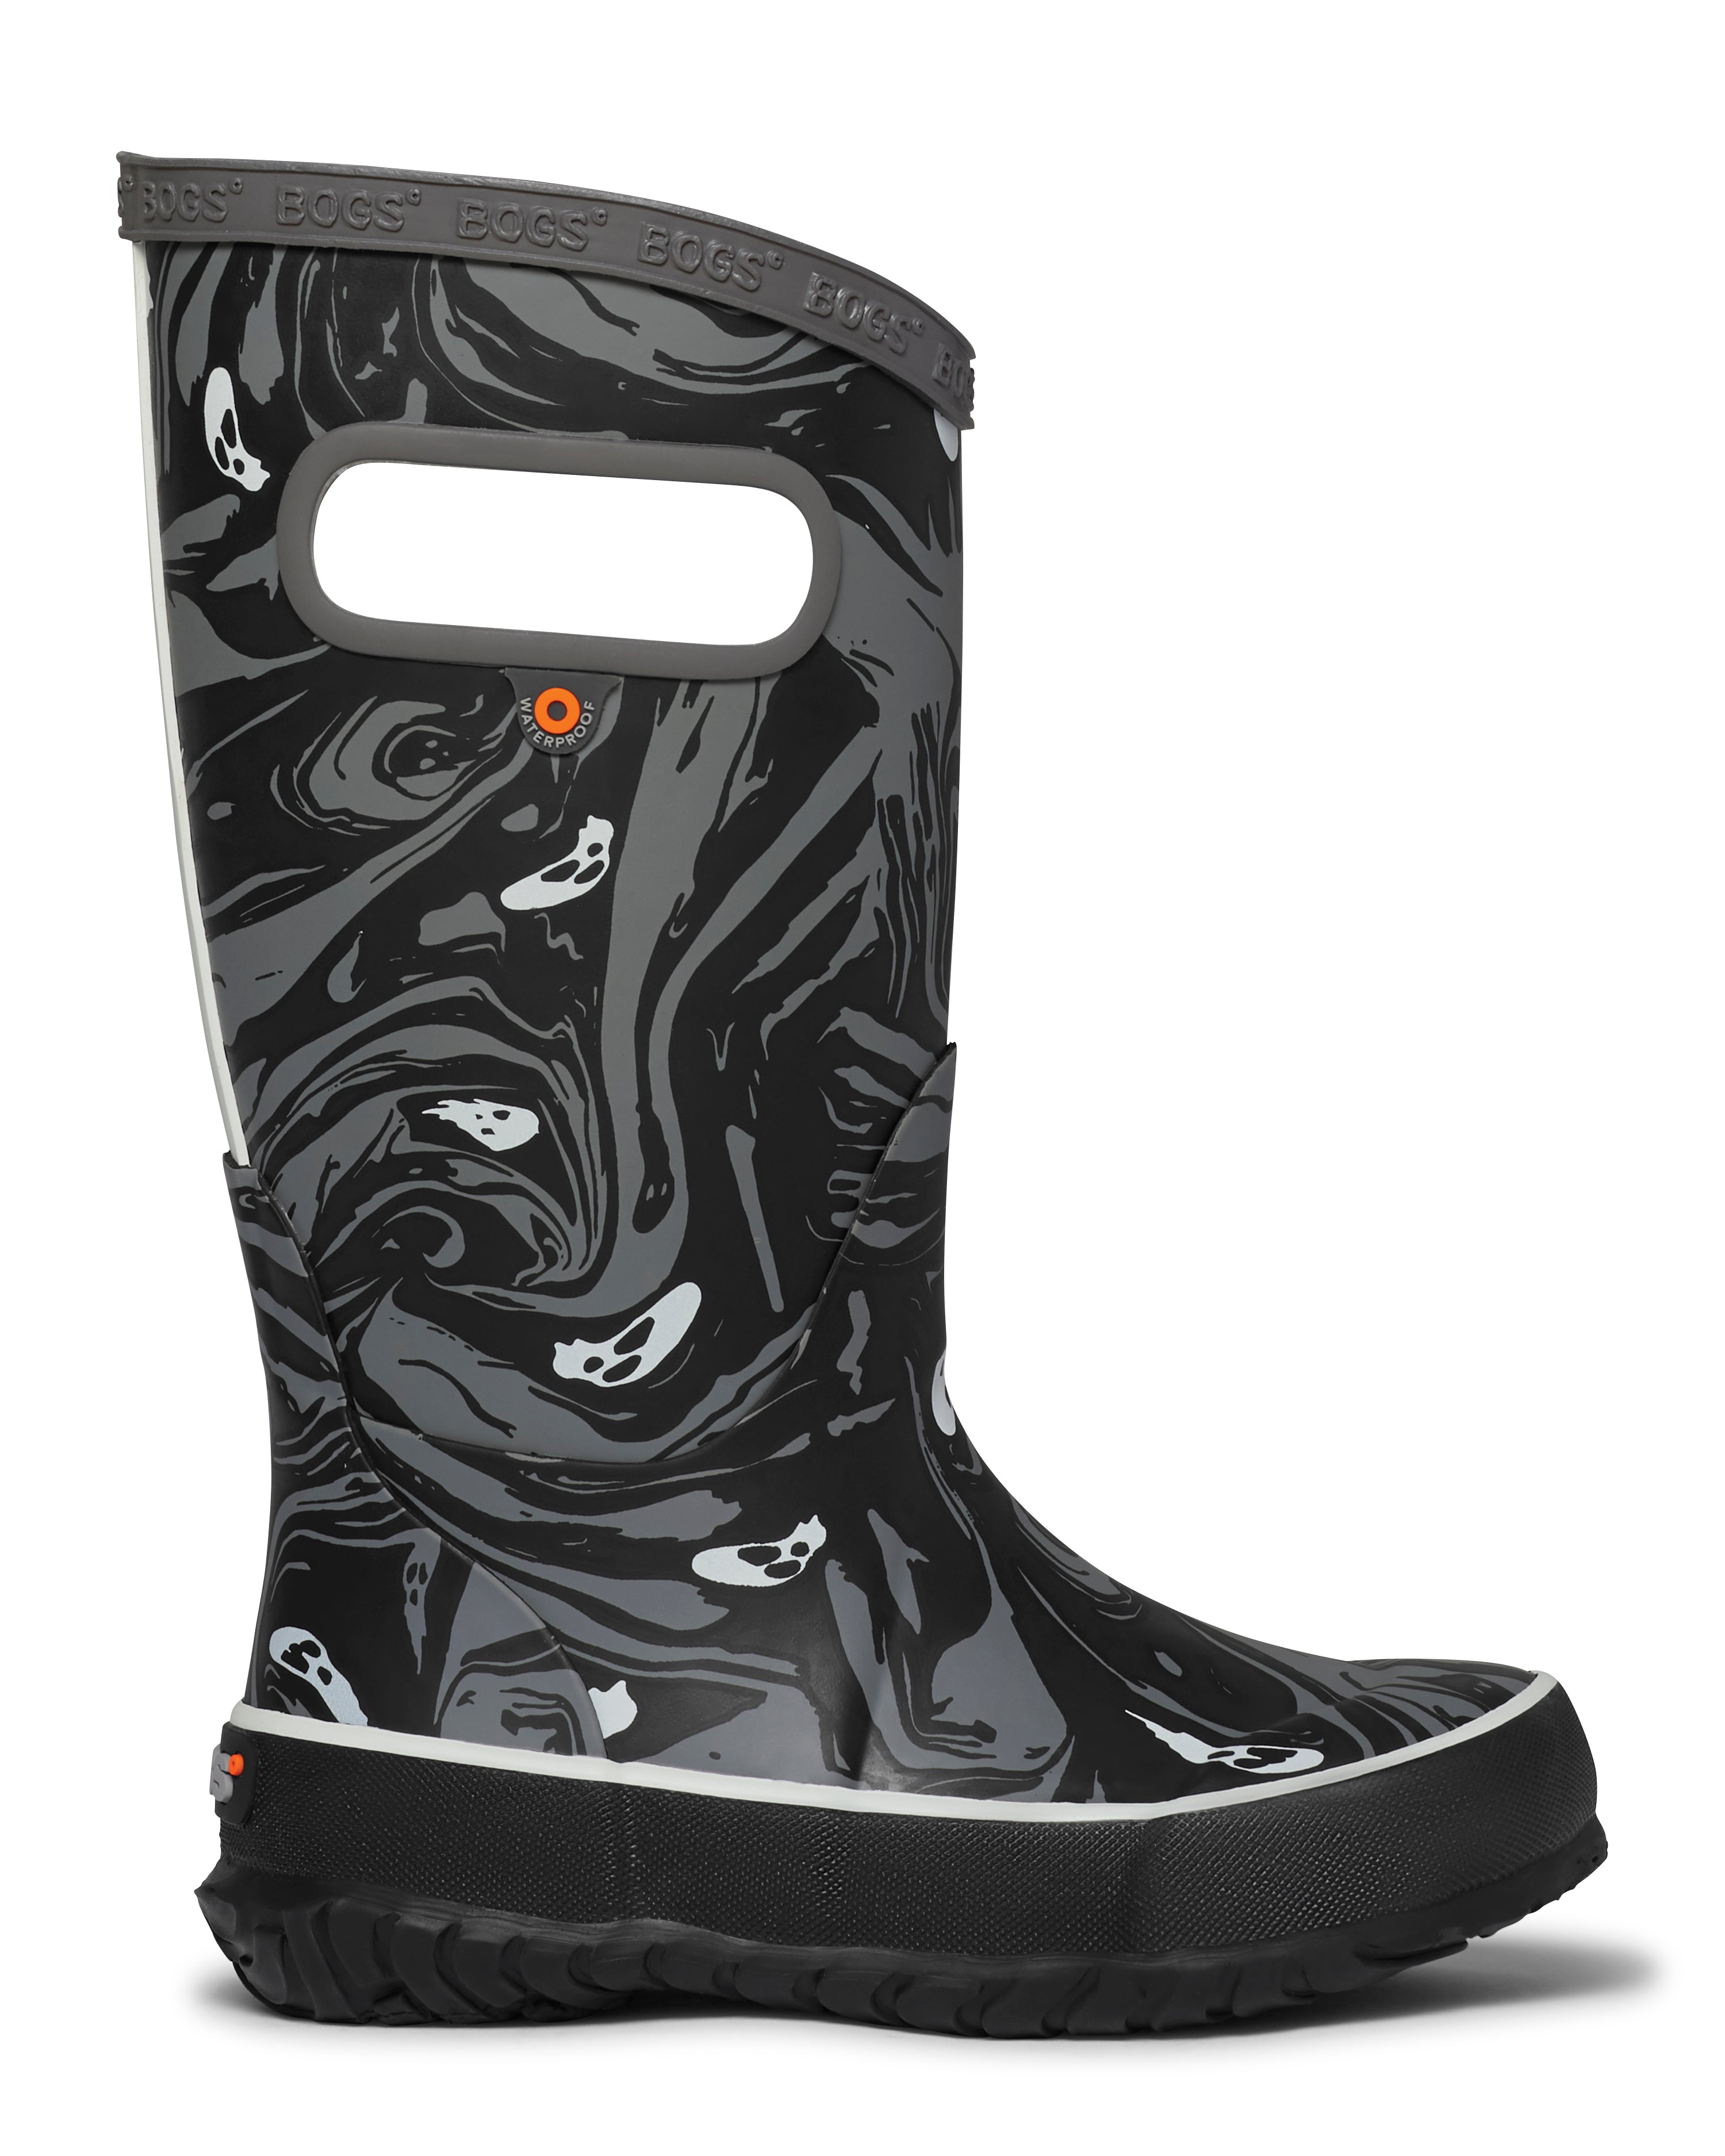 Rain Boot Spooky Print - Black/Grey Multi